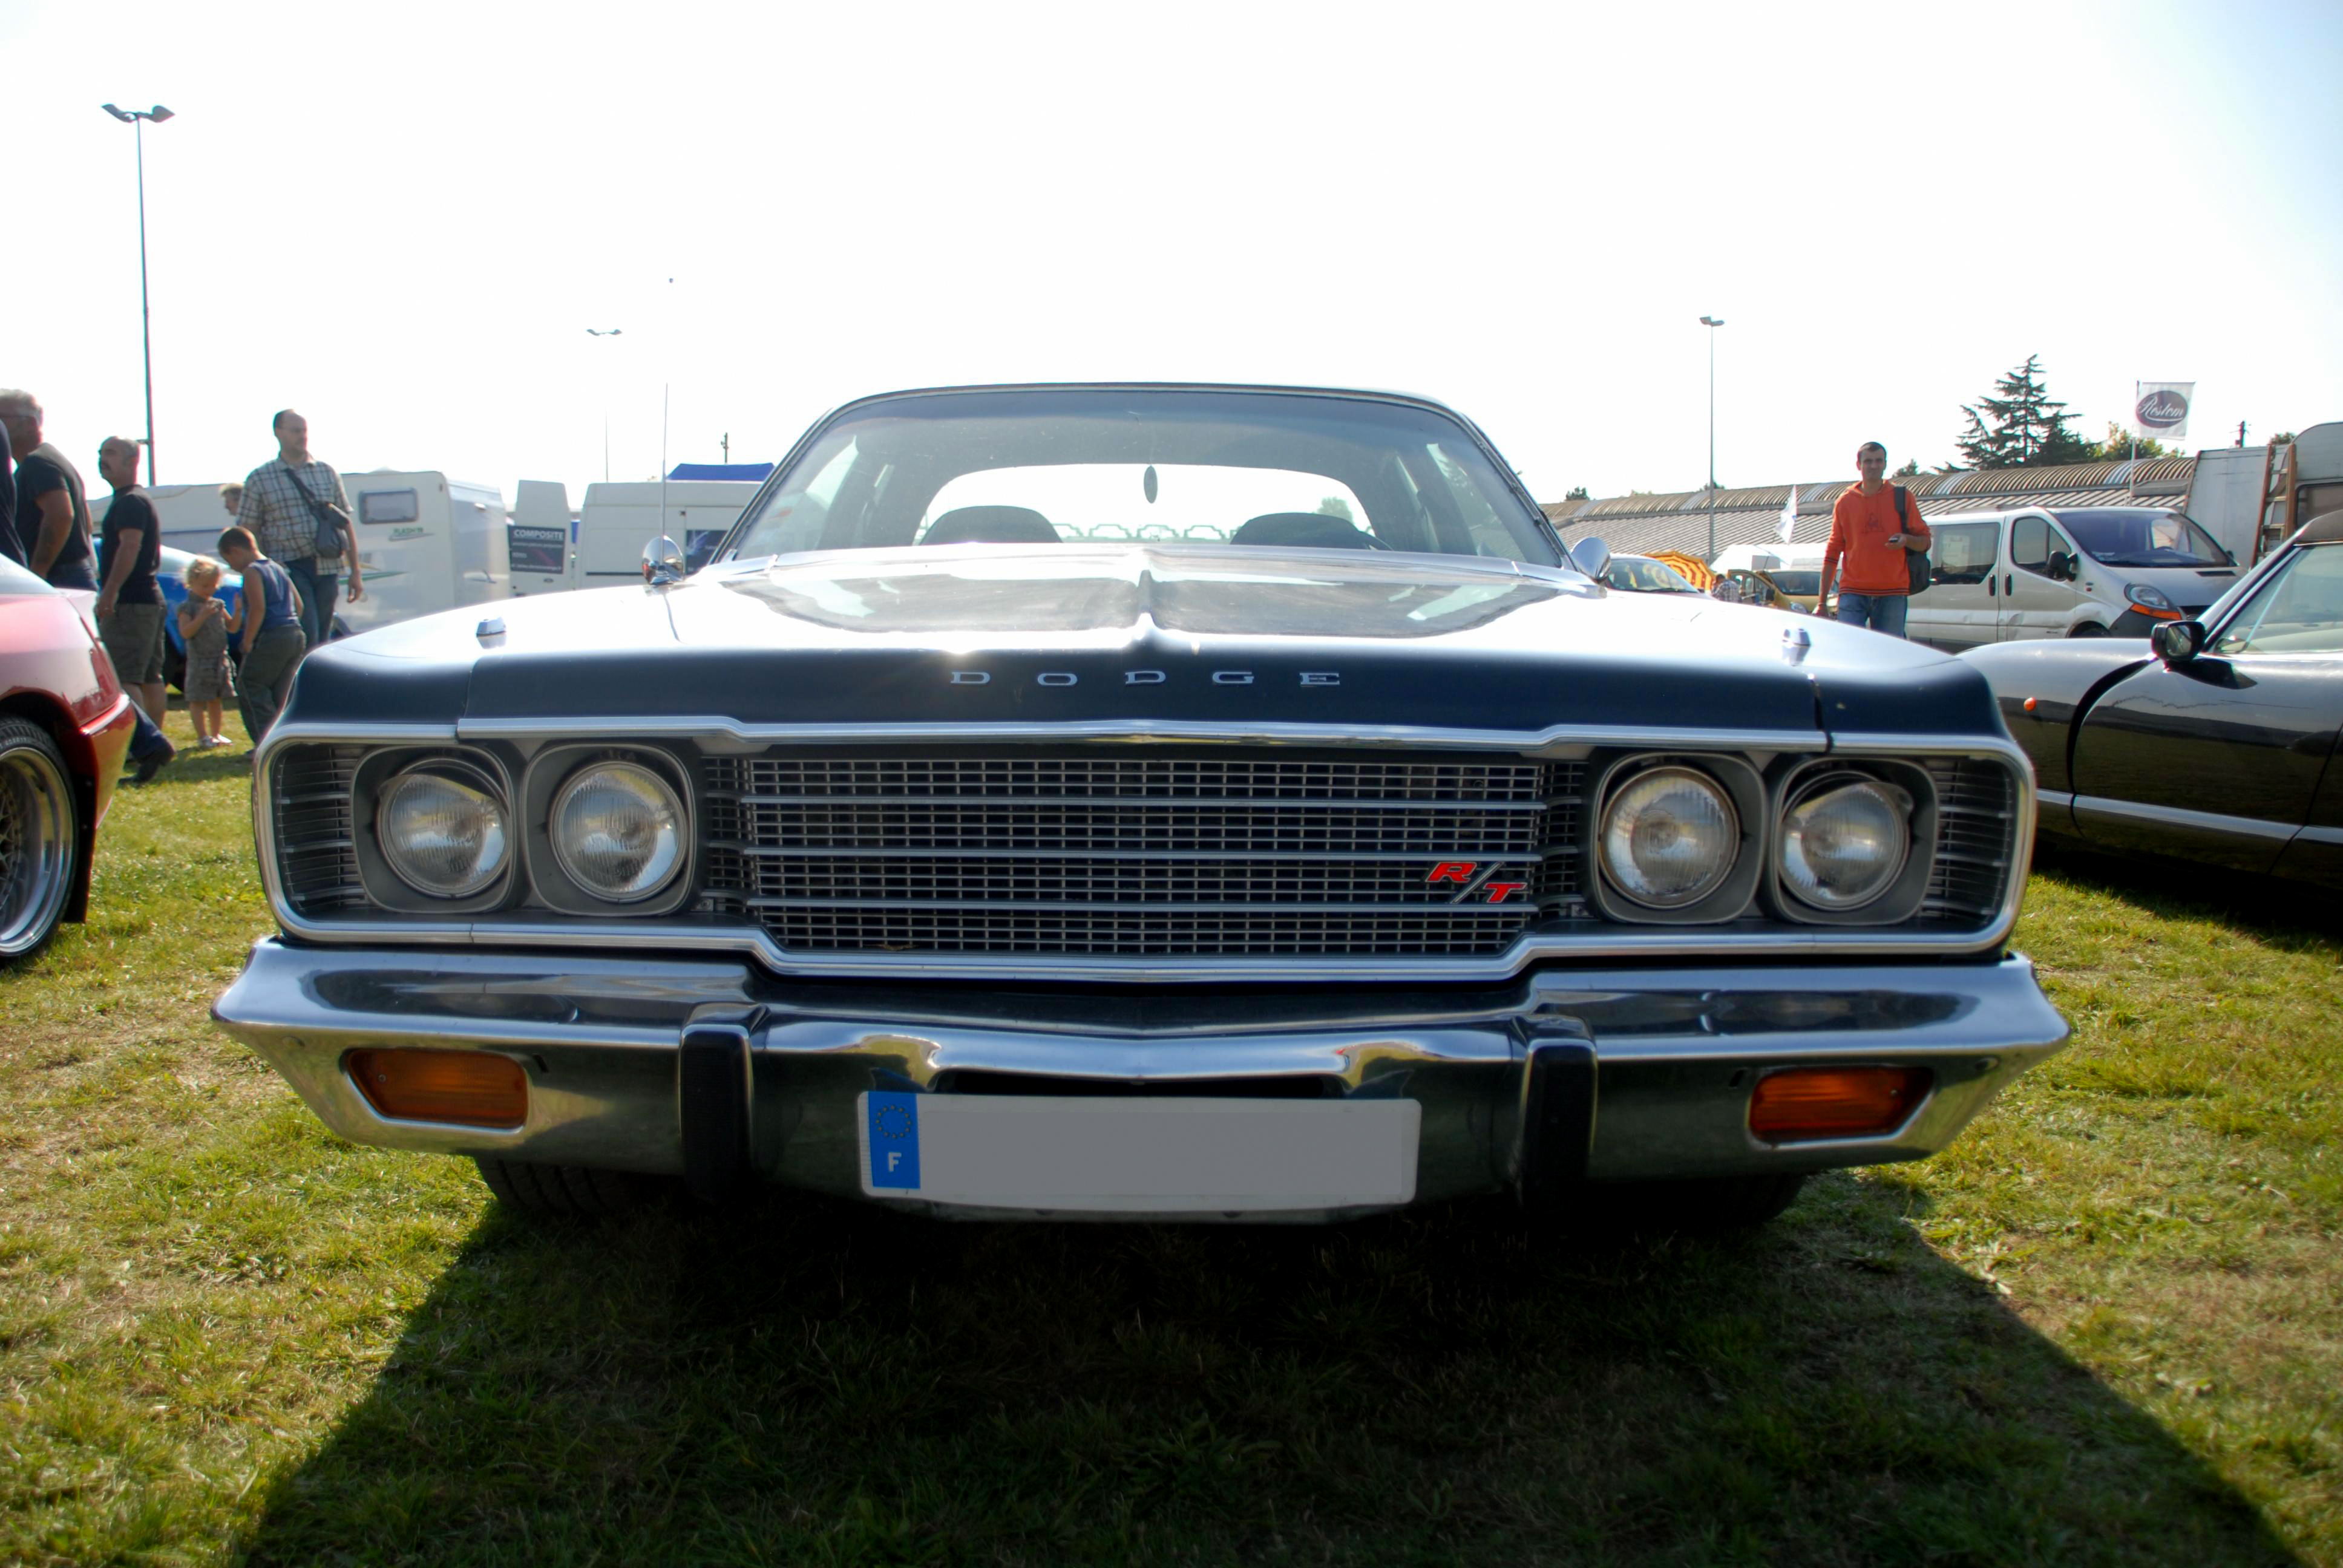 Dodge Coronet R/T sedan 1974 | Flickr - Photo Sharing!